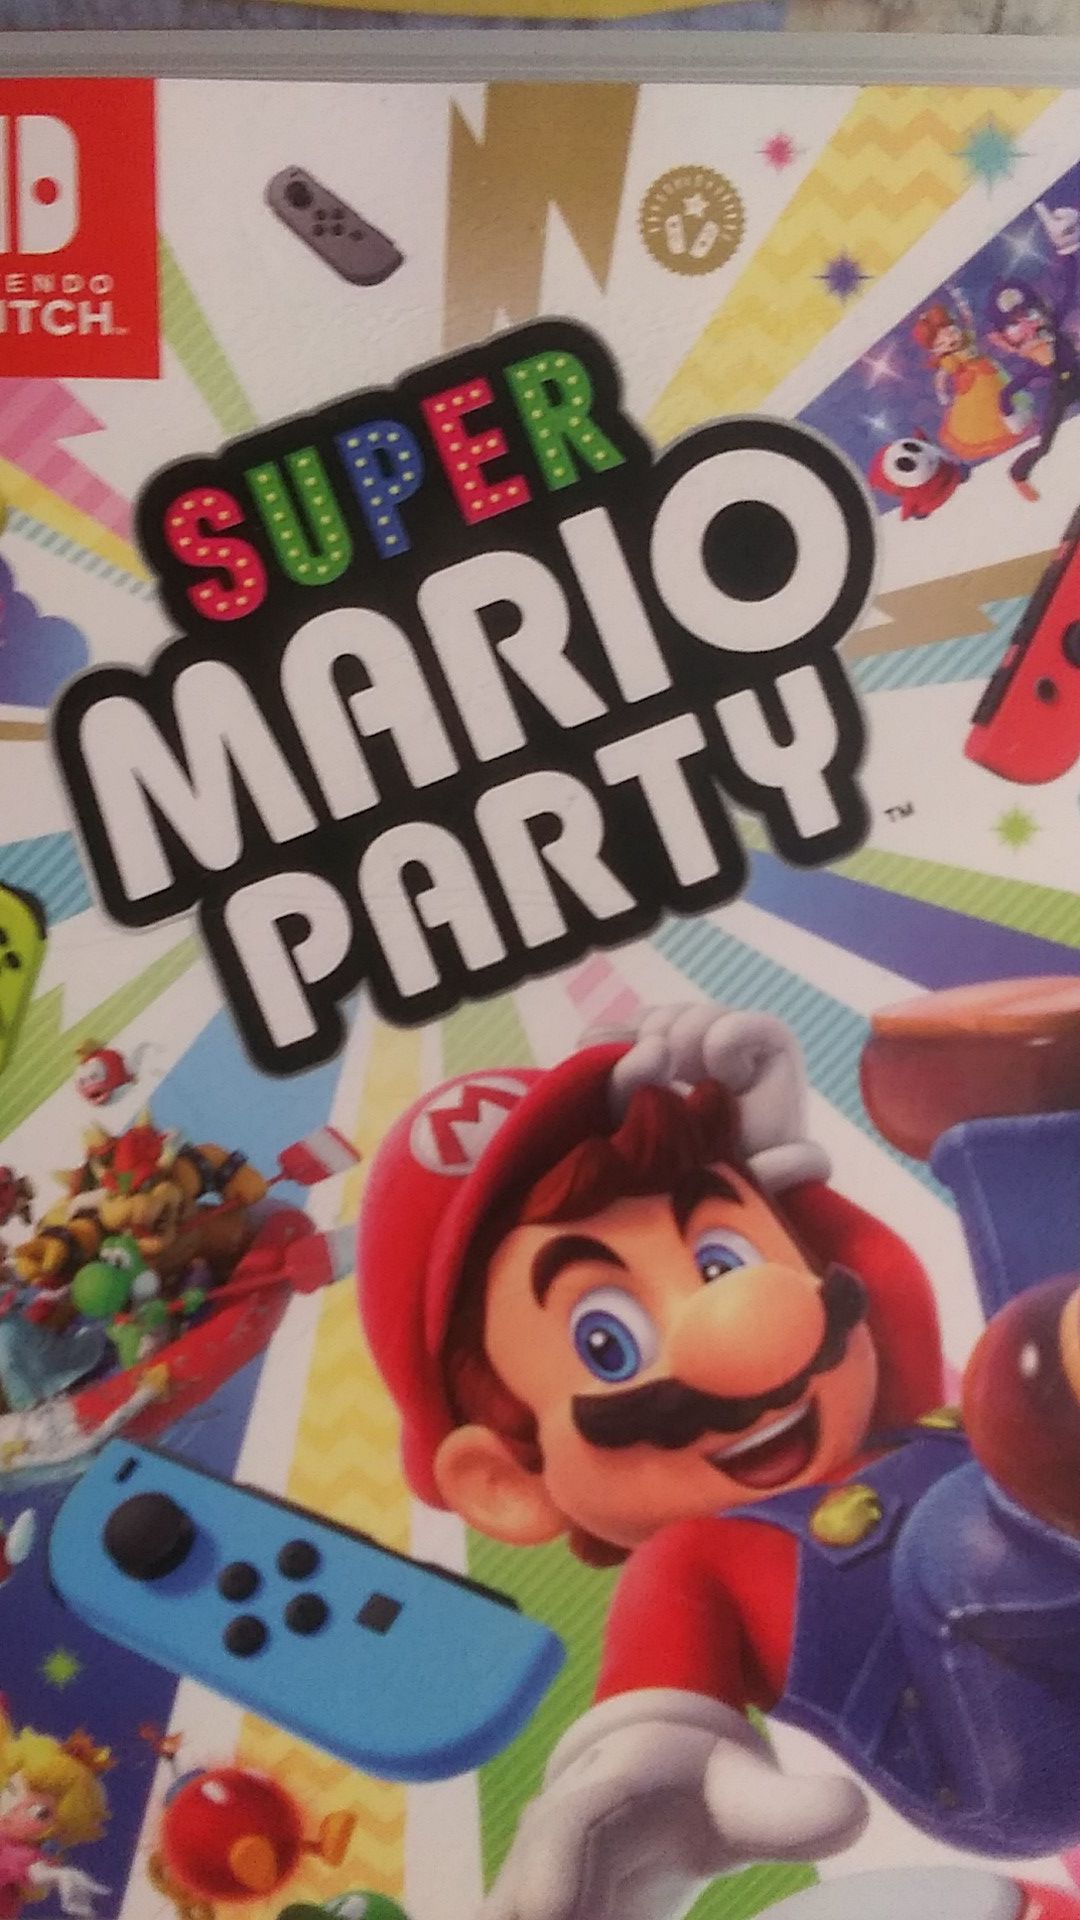 Mario party Nintendo switch